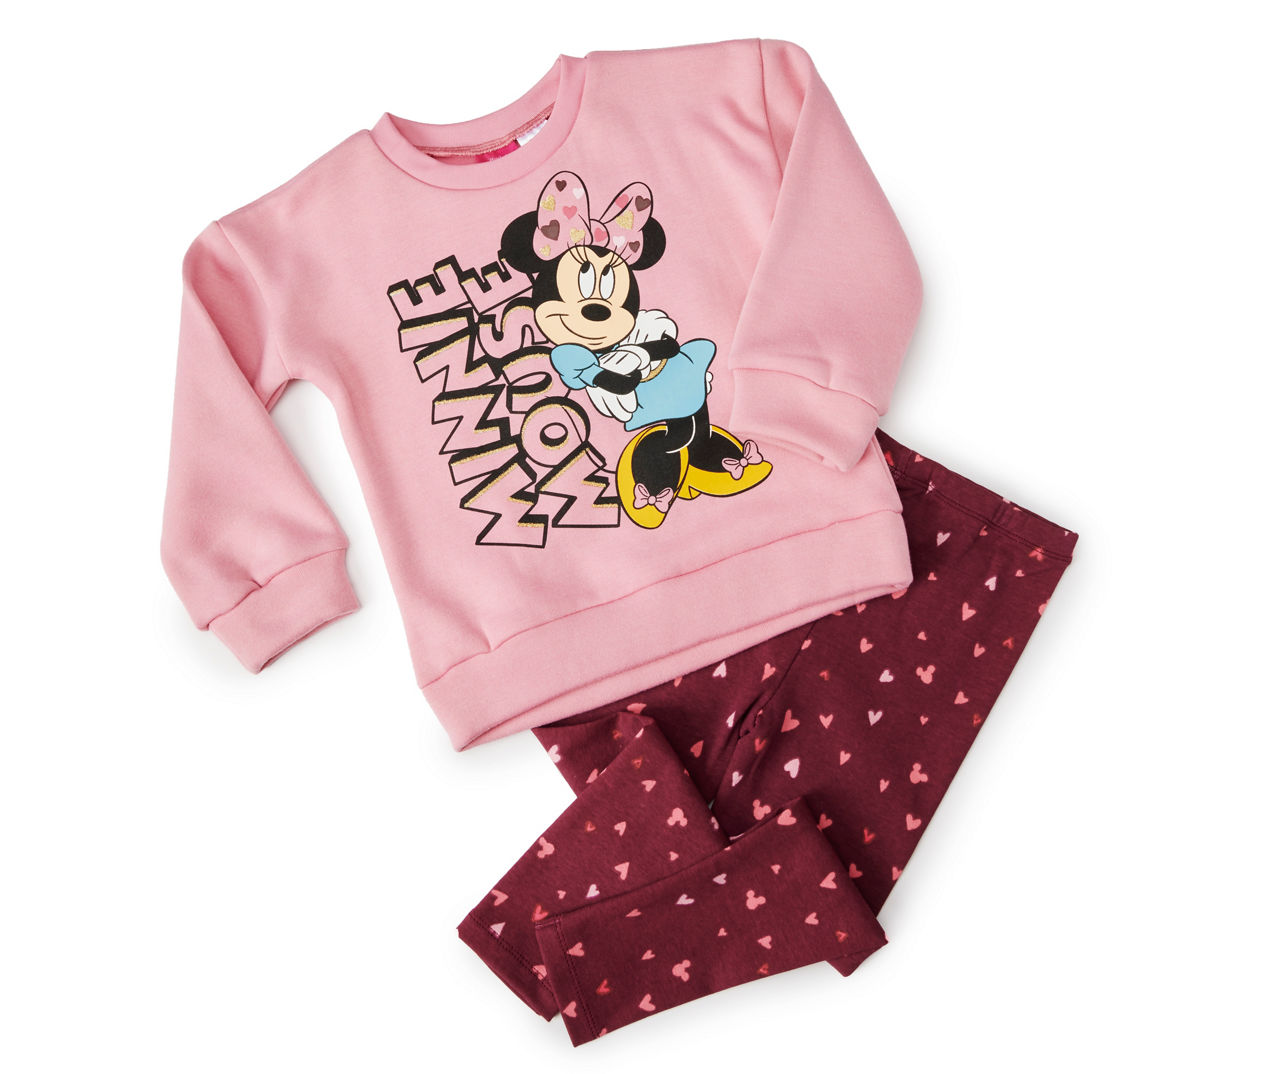 Toddler Size 4T Pink Minnie Mouse Fleece Sweatshirt & Burgundy Heart Leggings